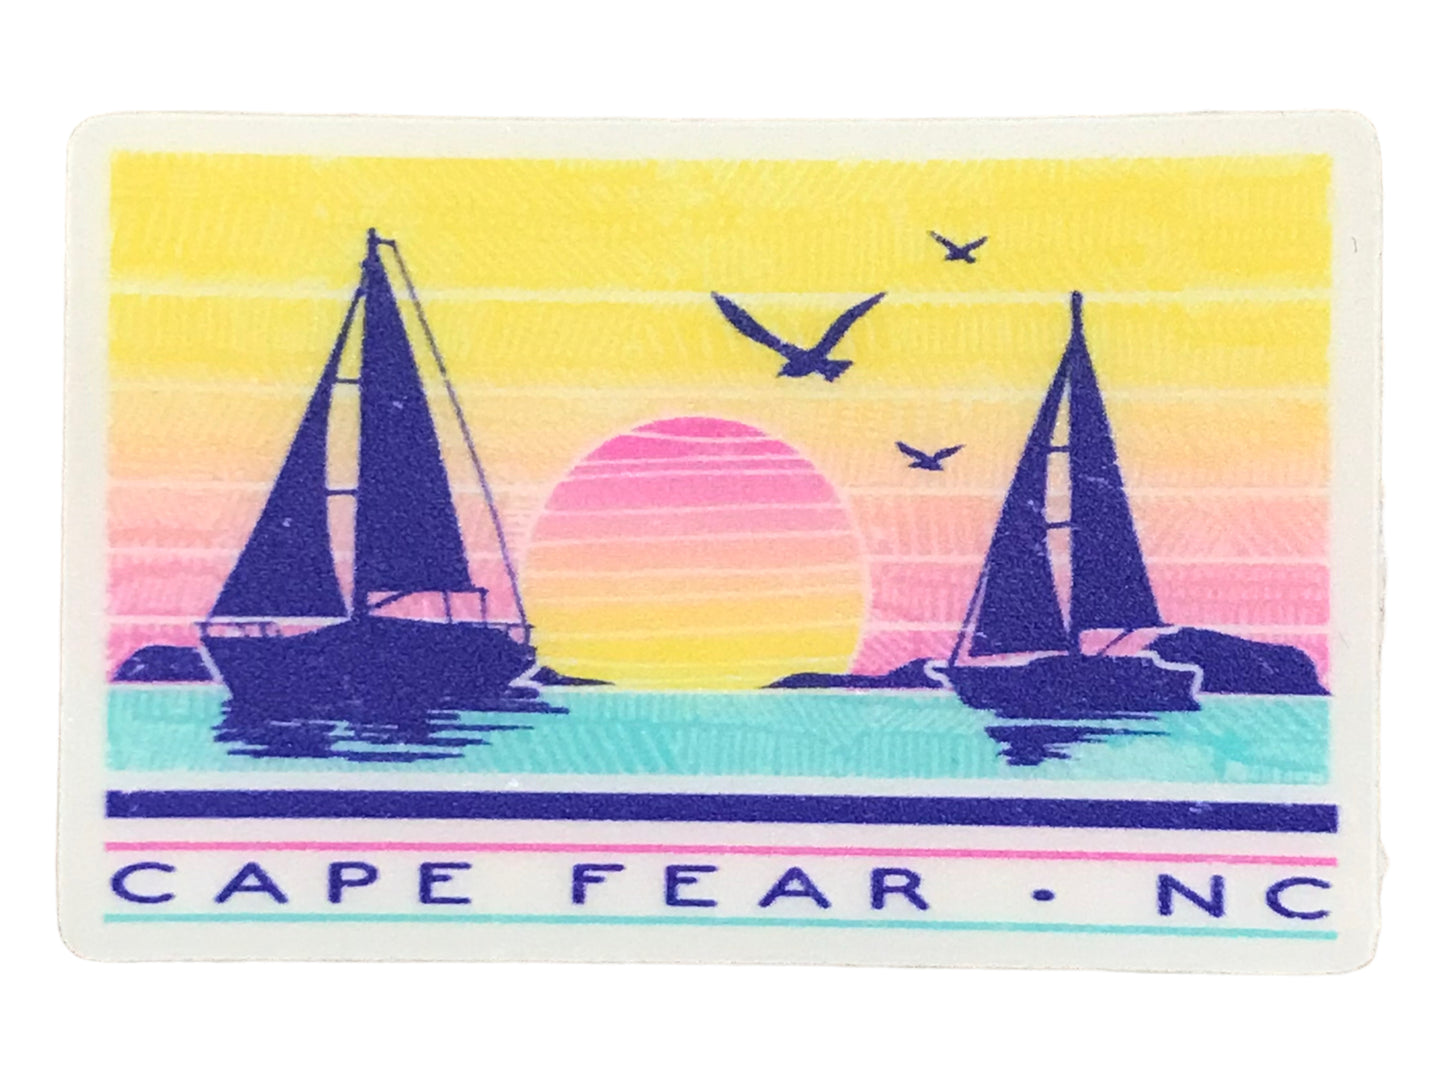 Cape Fear Sailboat - Mini Sticker ( Roughly 2" X 2" )